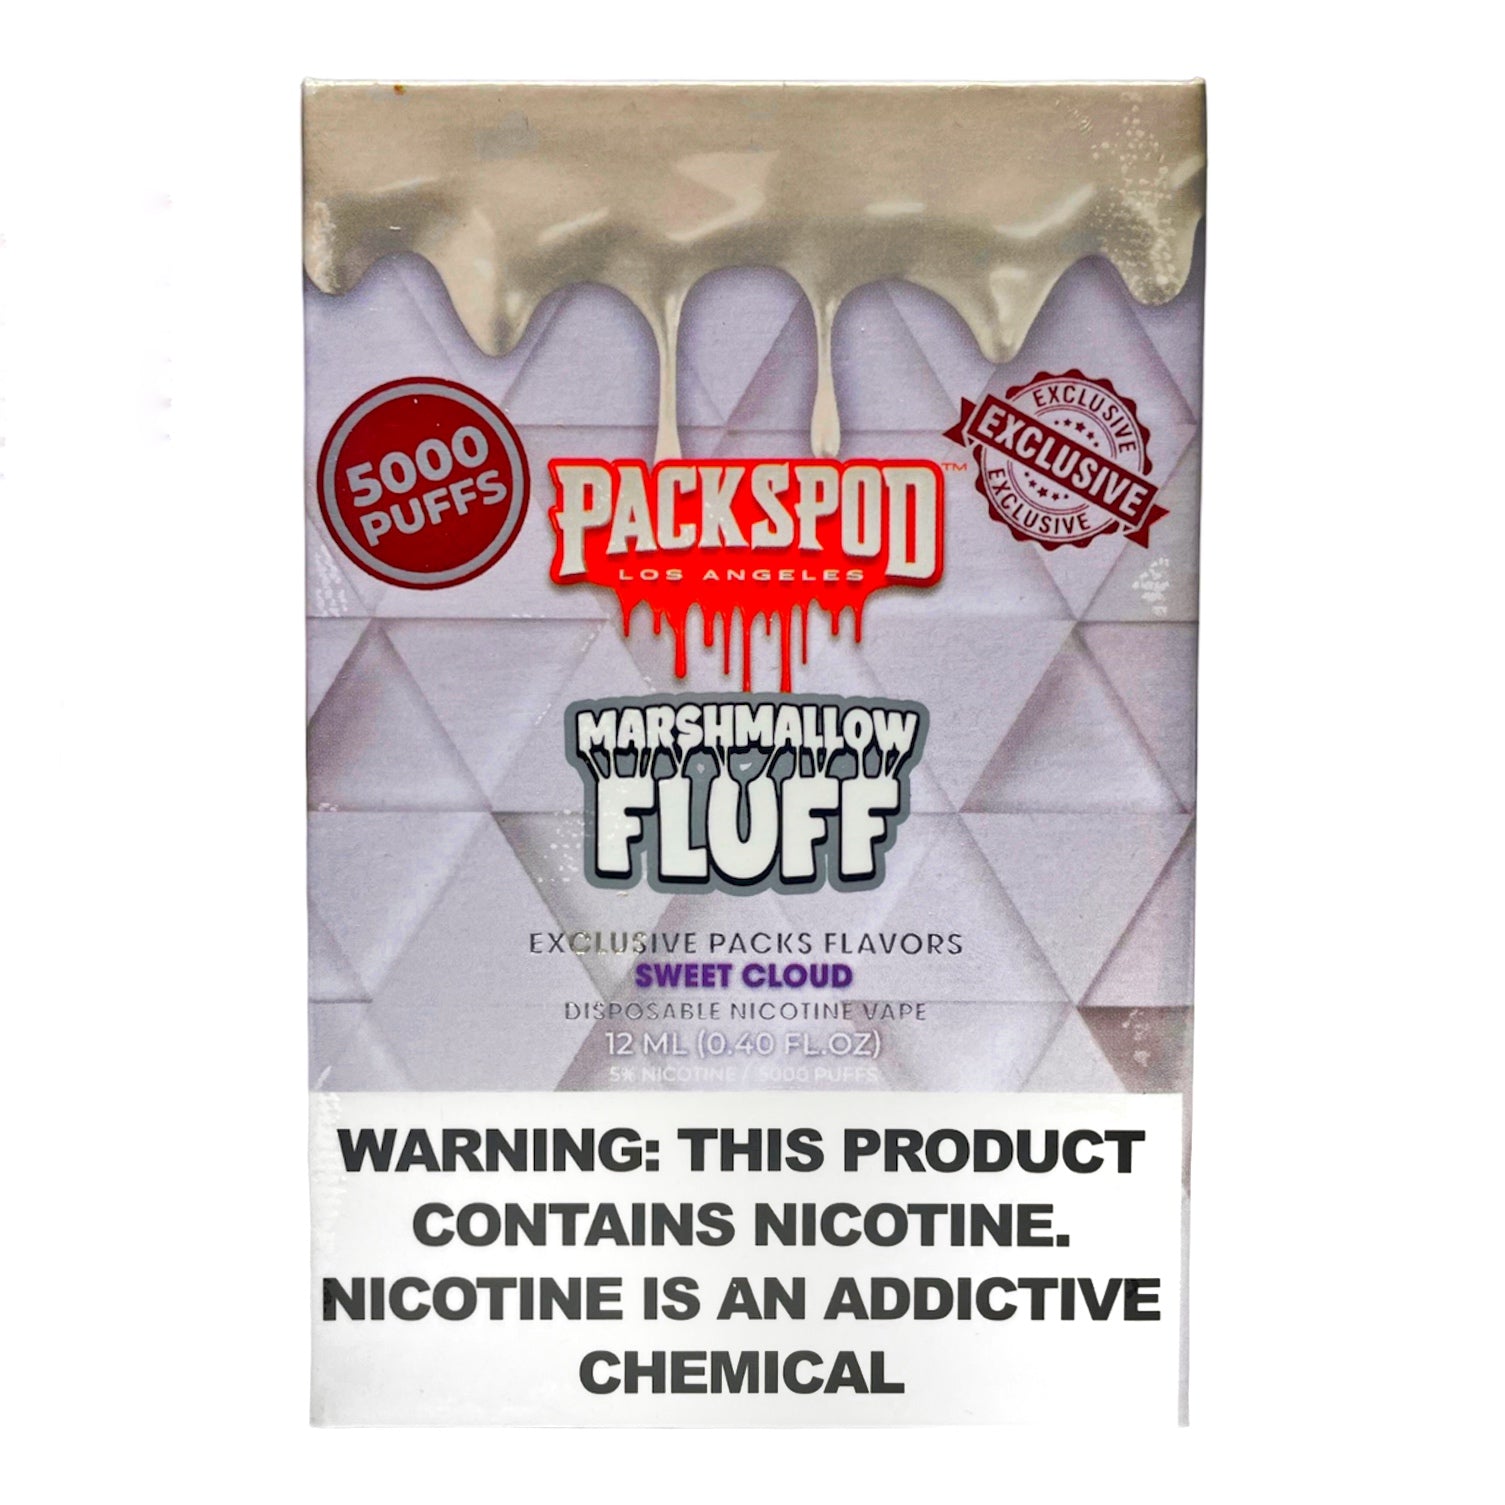 Packspod Mashmallow Fluff Flavor